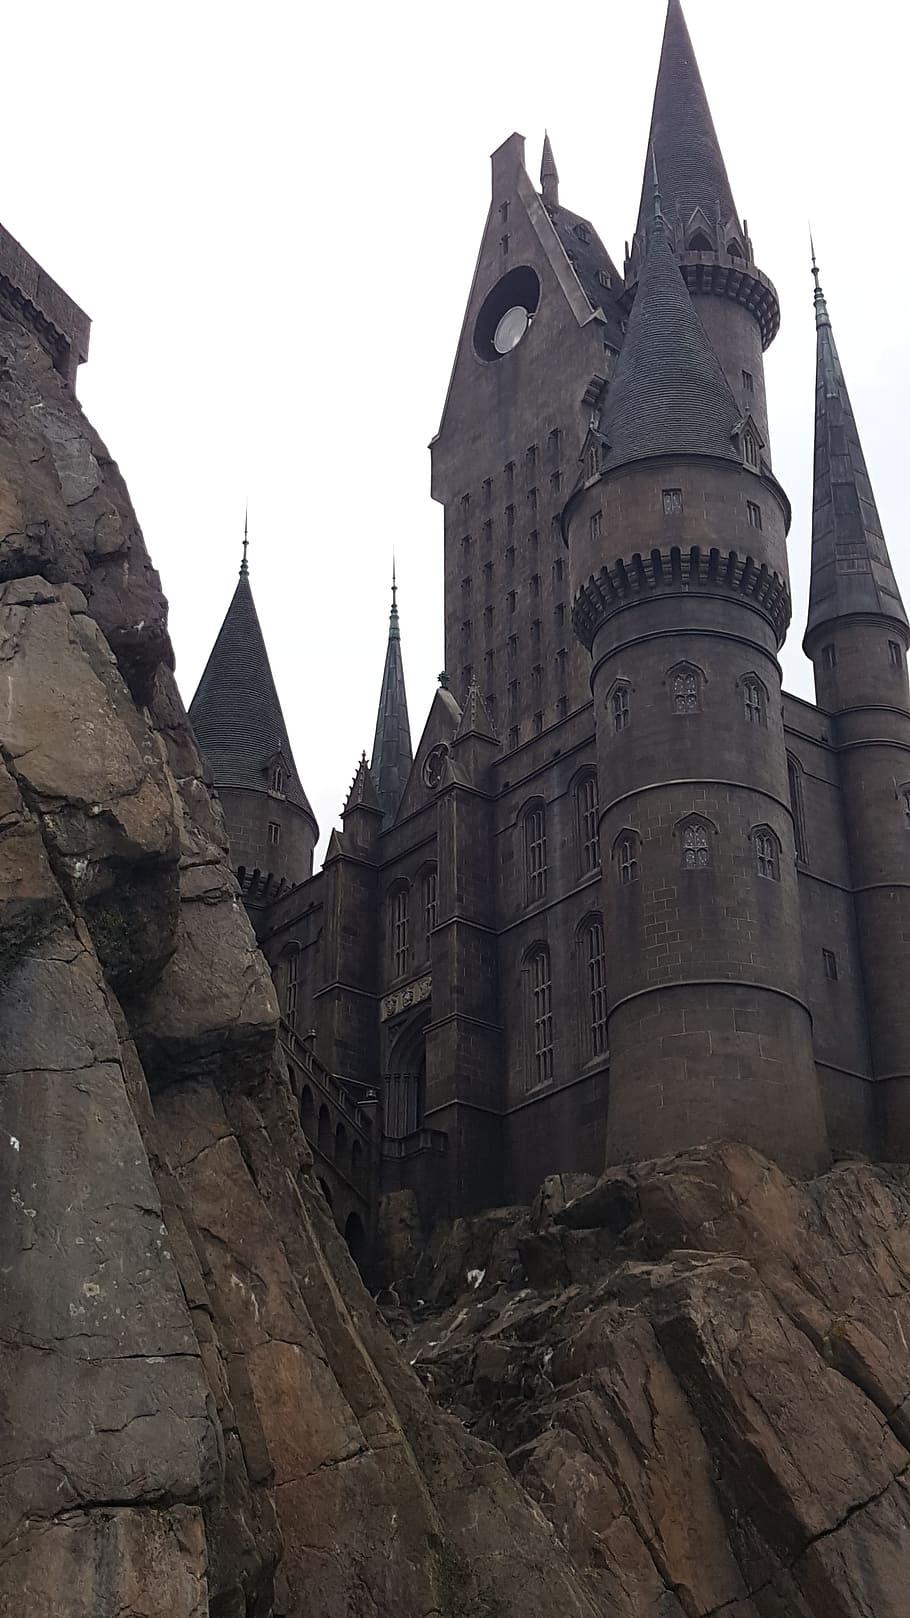 Hogwarts, Castle, Harry Potter, hogwarts, castle, architecture, building exterior, day, outdoors, sky, built structure